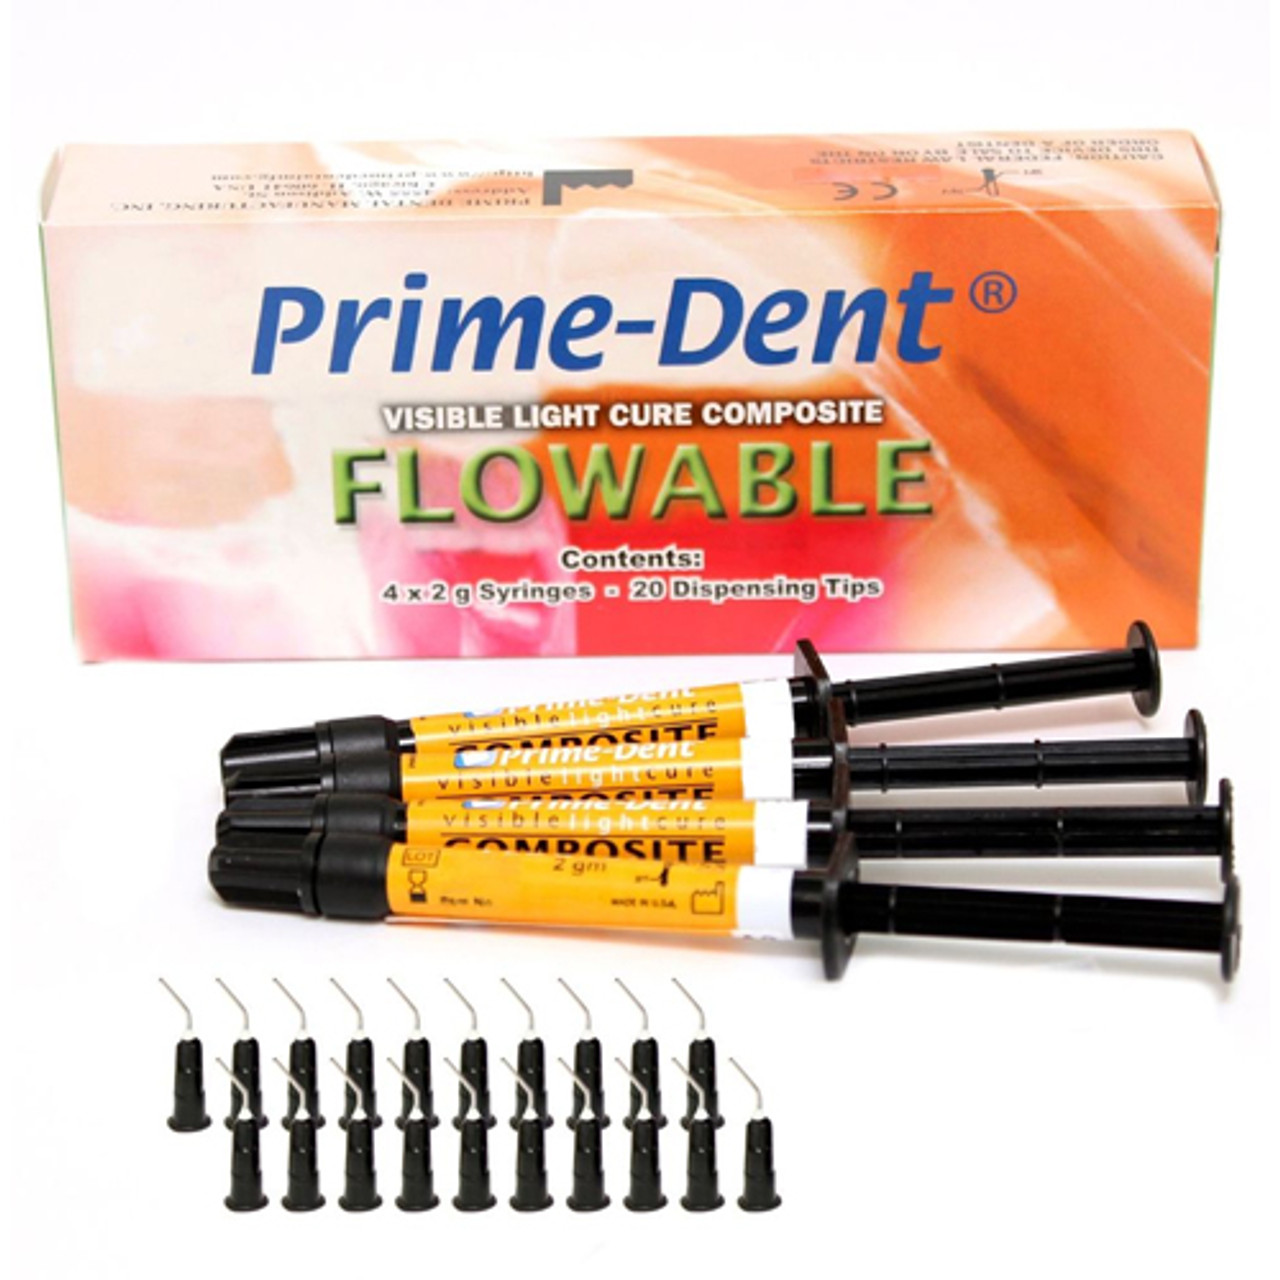 Prime-Dent Flowable Composite C1 - 4 Syringe Kit. VLC (Visible Light Cure)